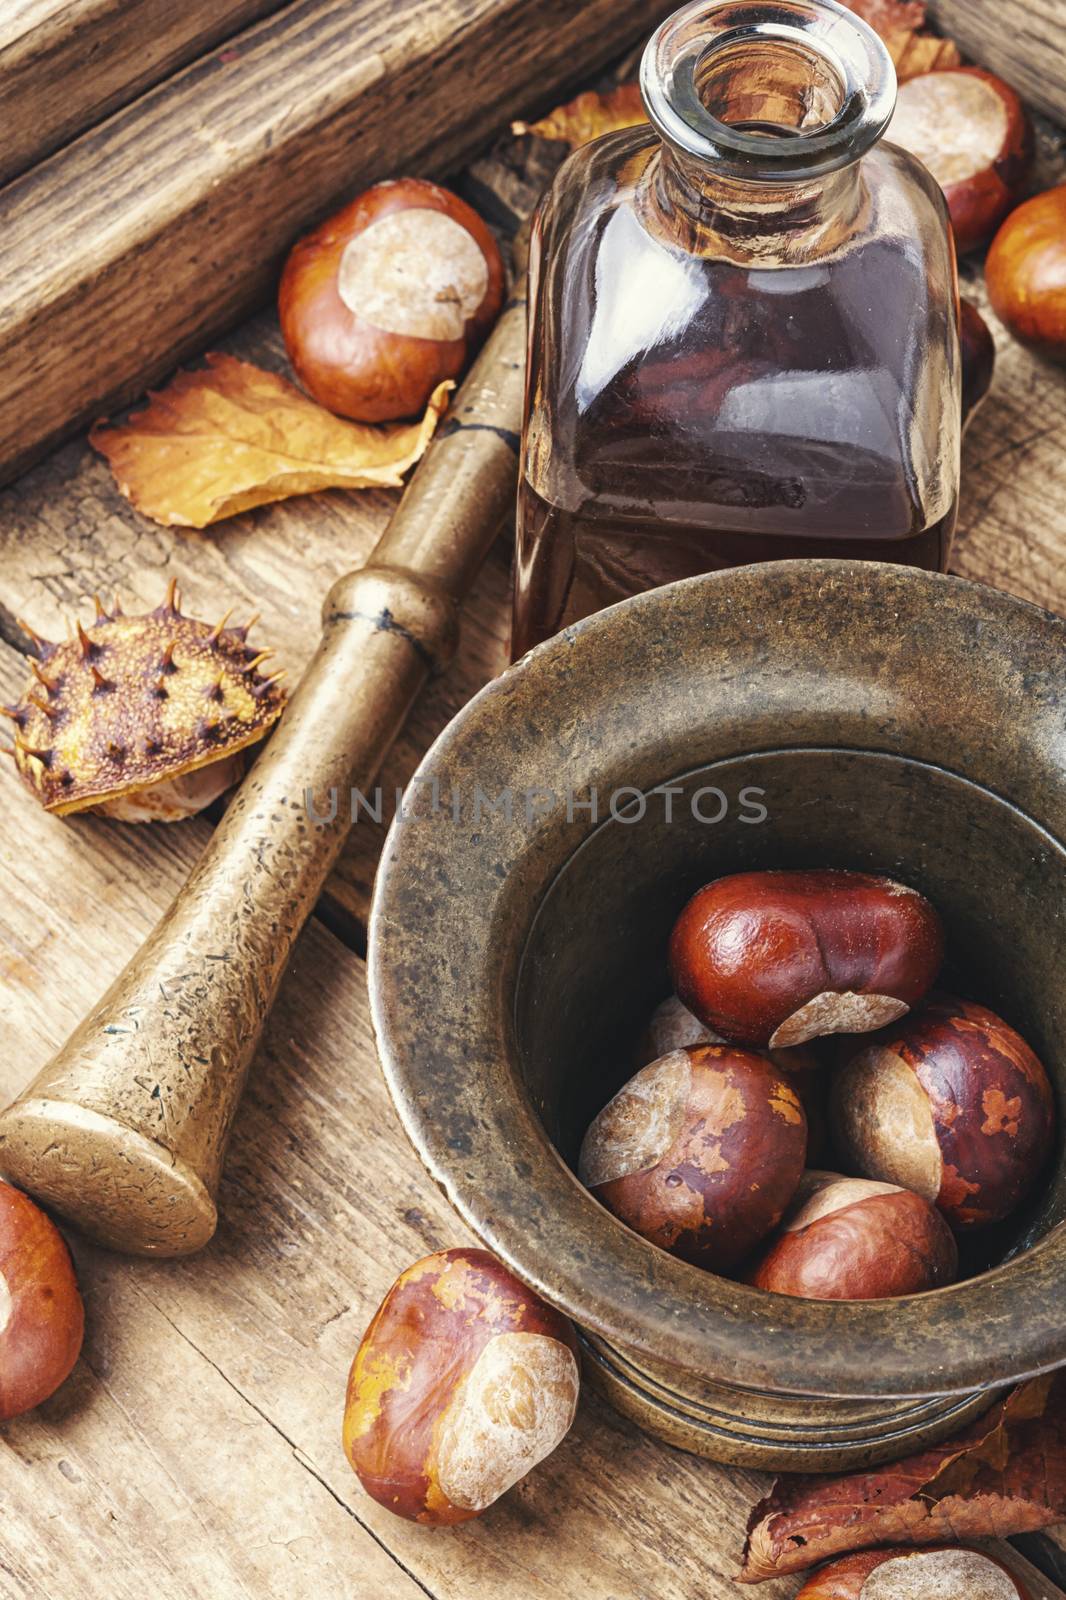 Chestnut in herbal medicine by LMykola